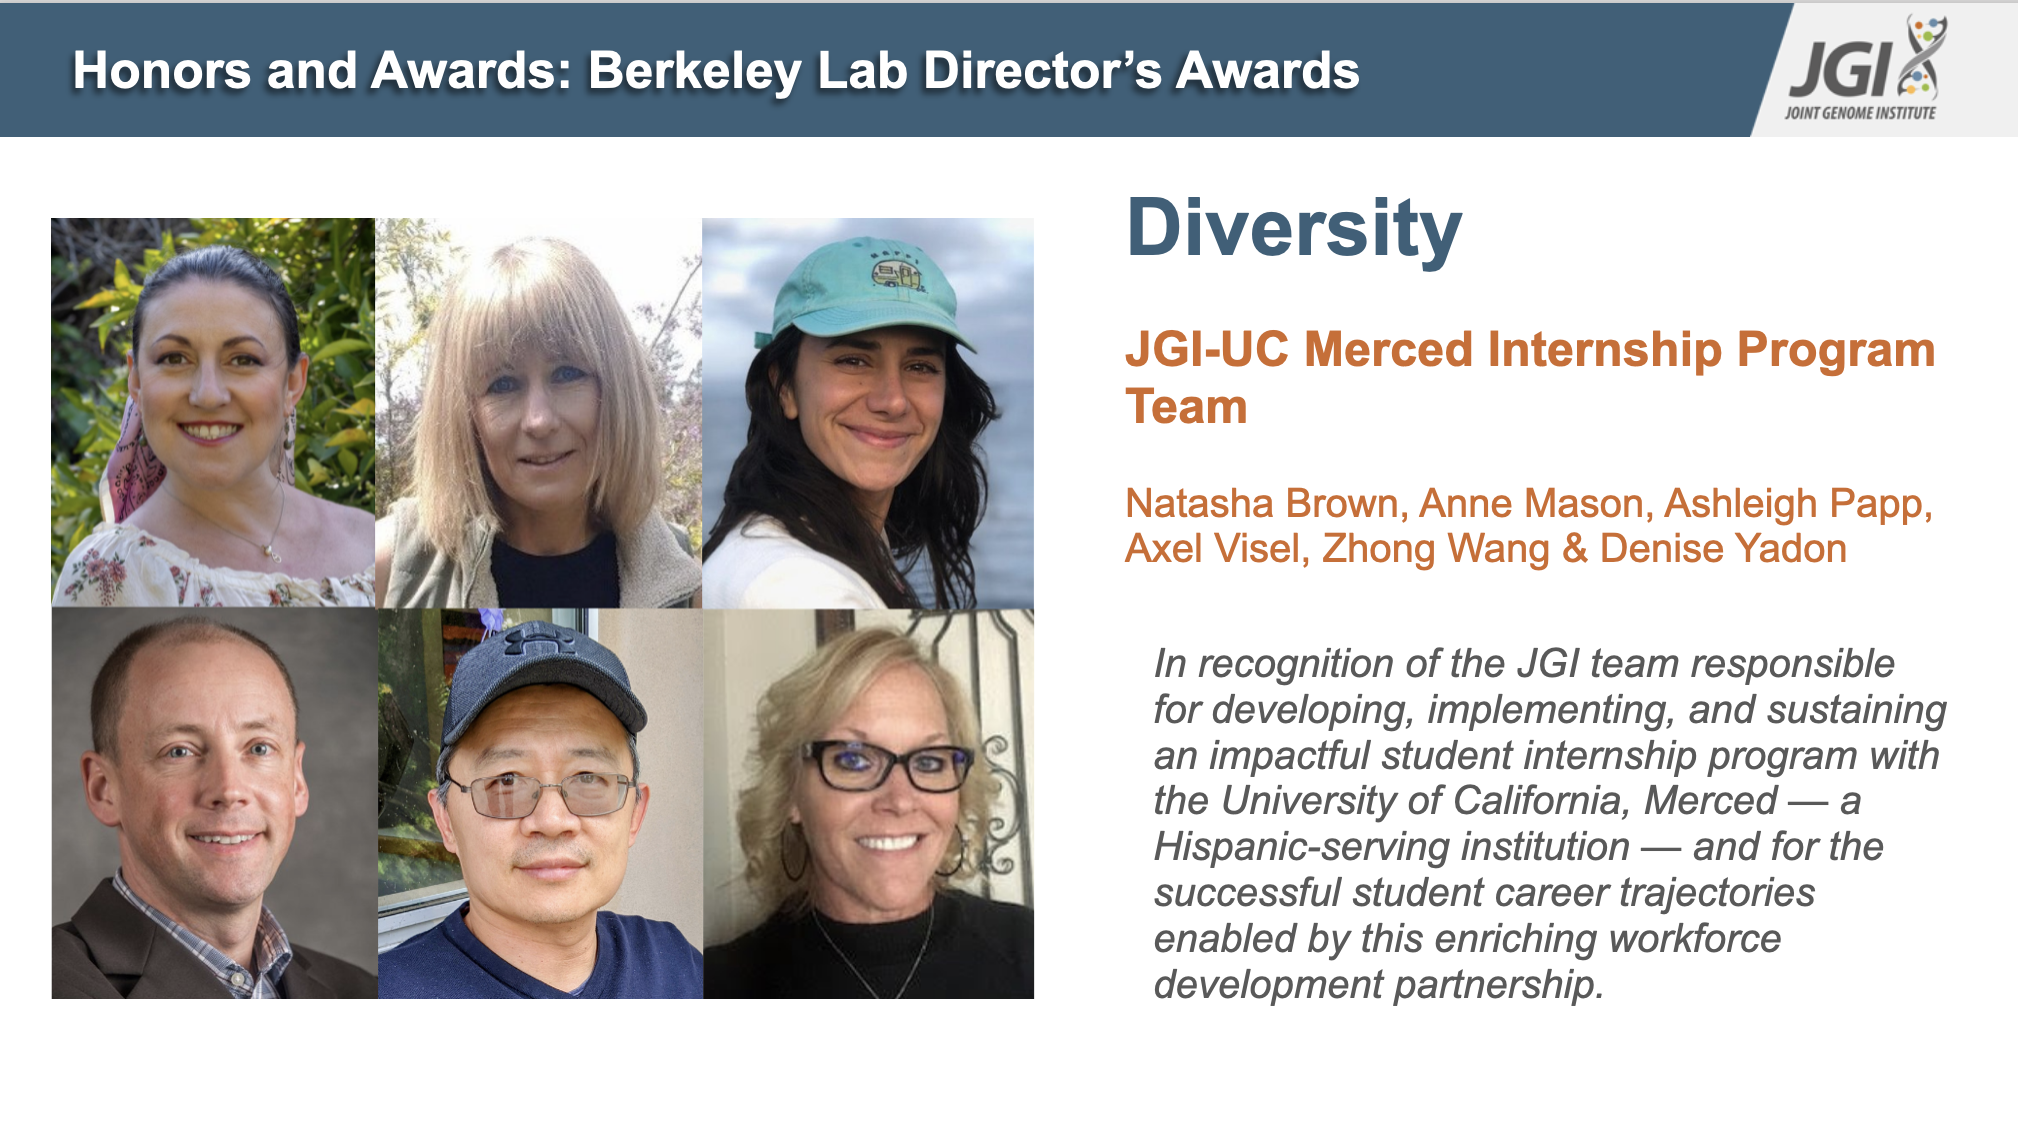 JGI-UC Merced Internship Program Team recipients of the Berkeley Lab Director's Diversity Award